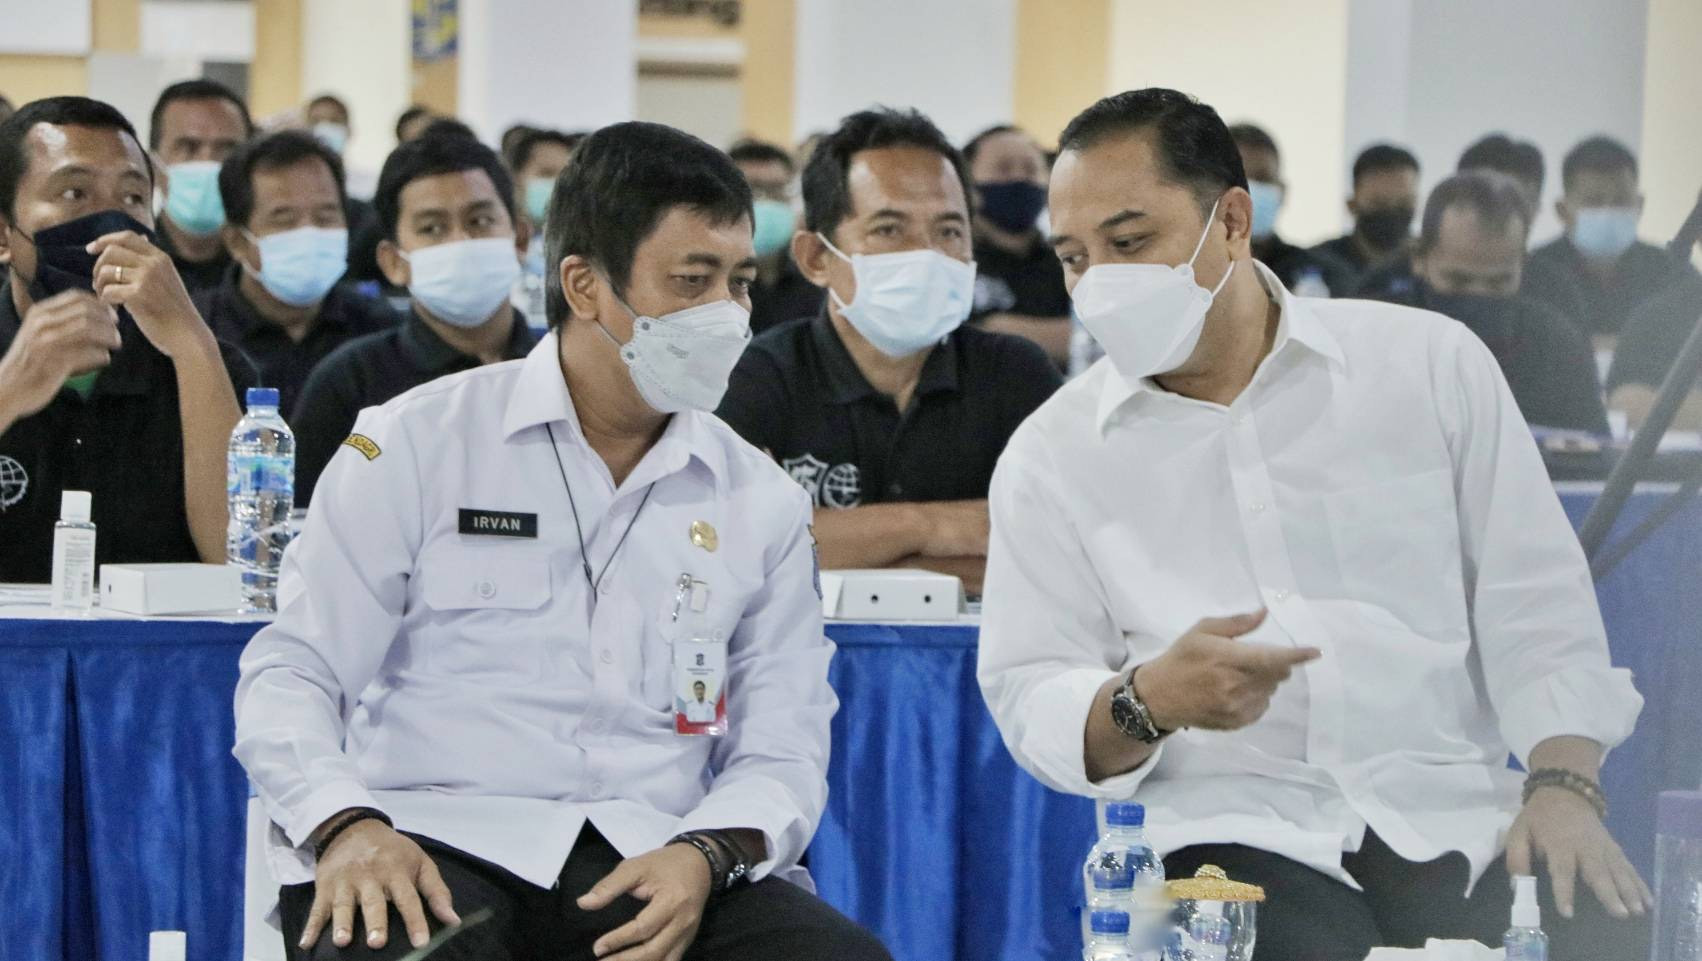 Gaji Pegawai Dishub Bandung 2019 / Dinas Perhubungan Buka Lowongan